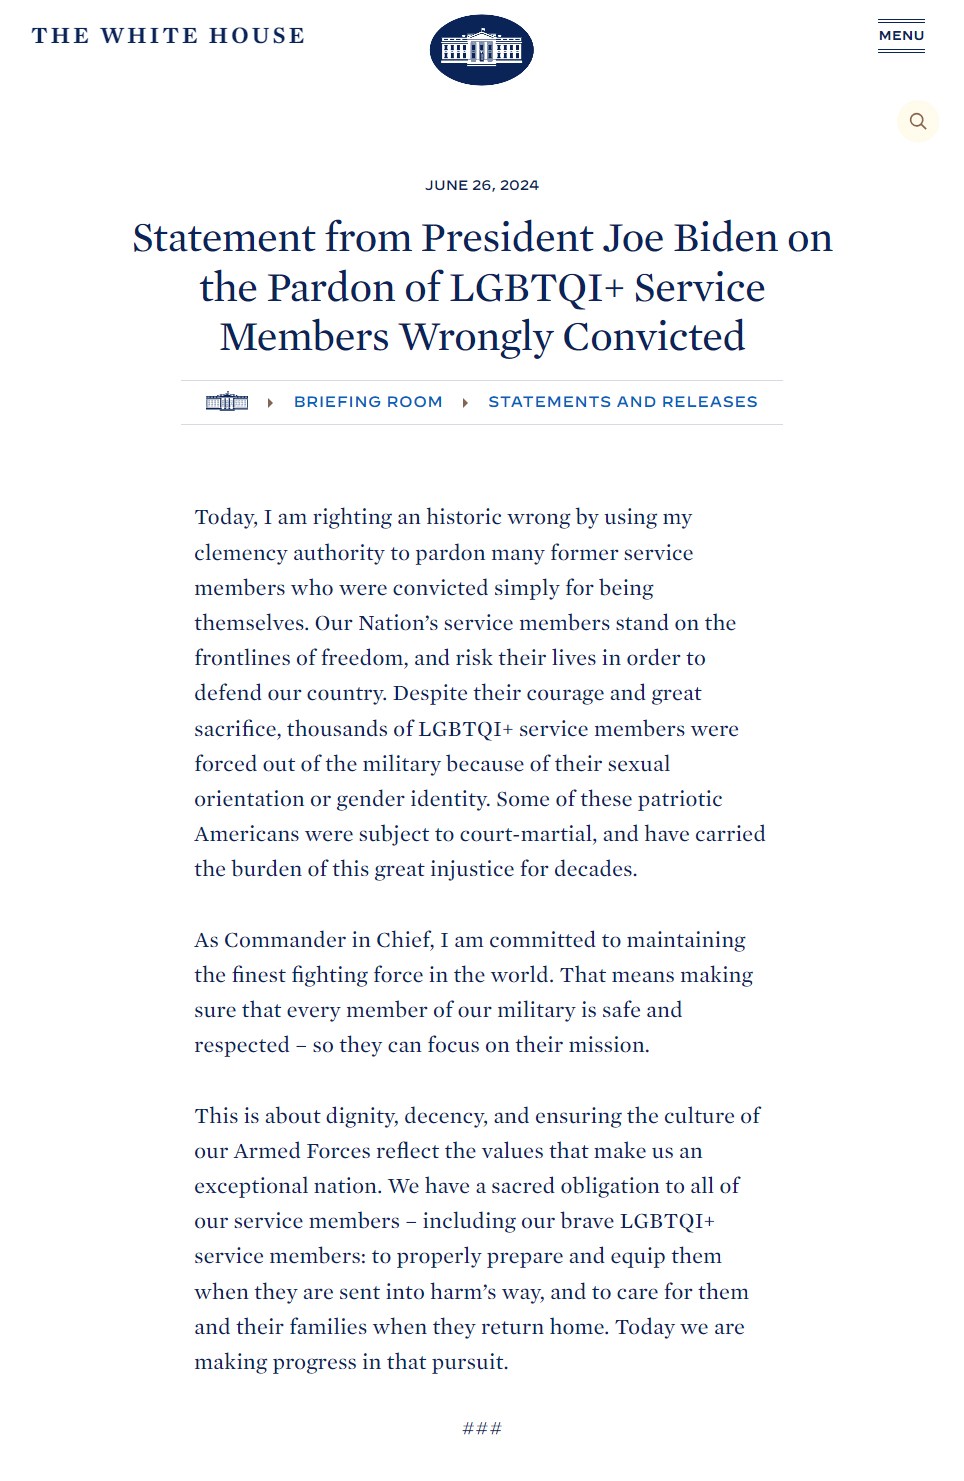 Presidential Pardon Benefits for LGBTQ+ Veterans